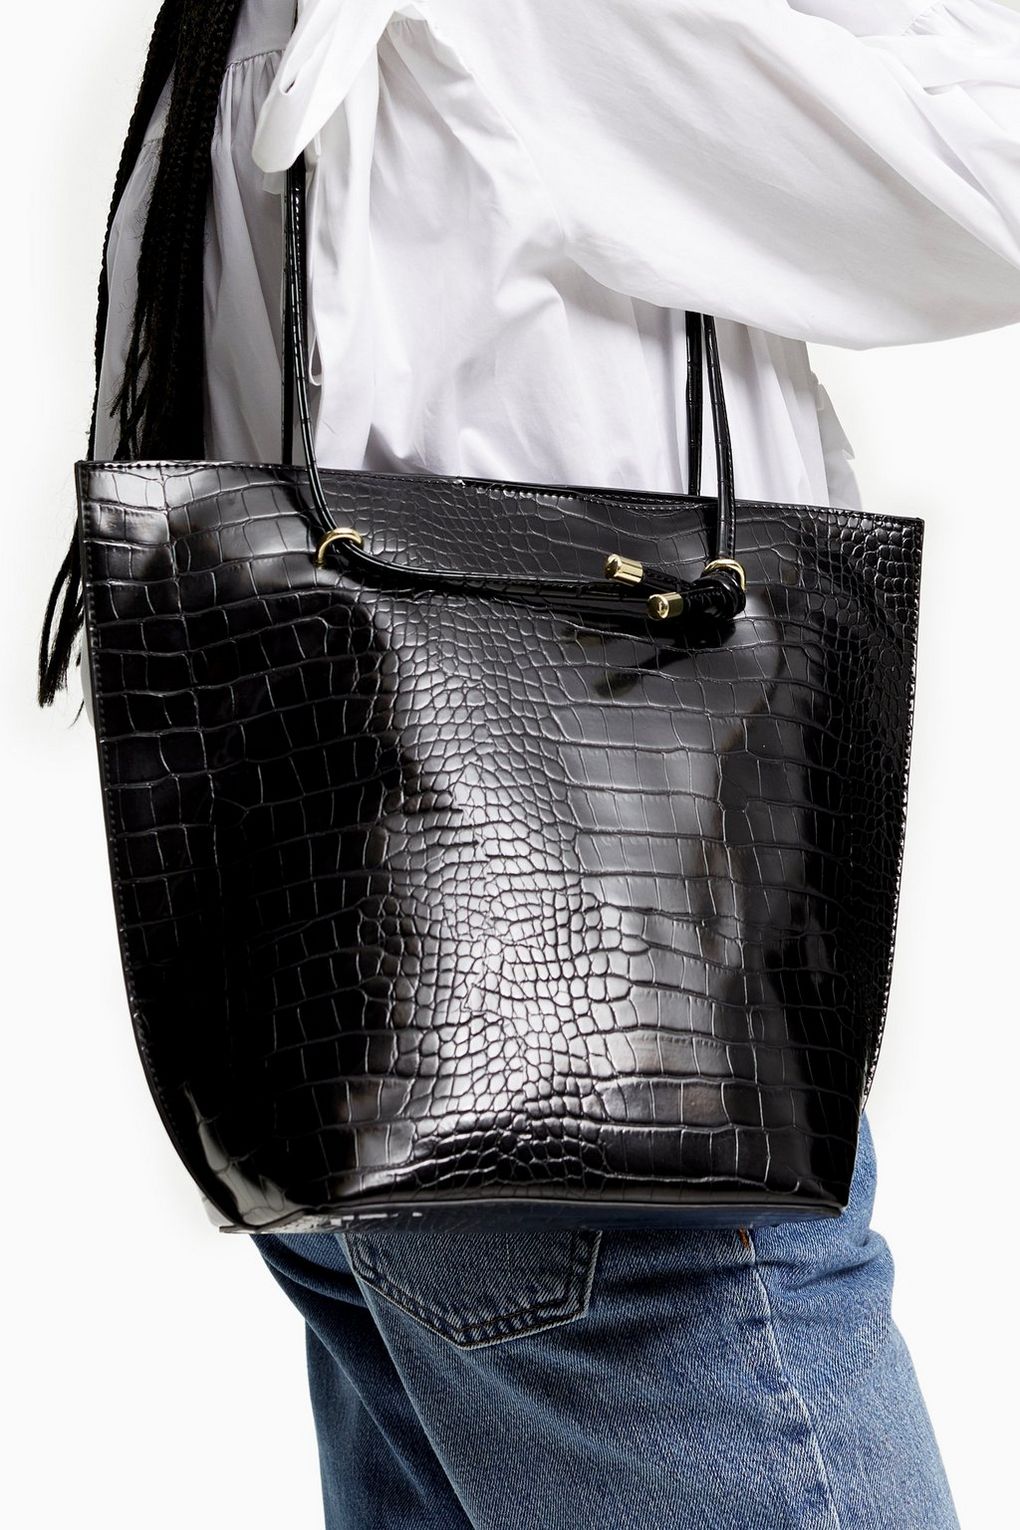 black croc handbag